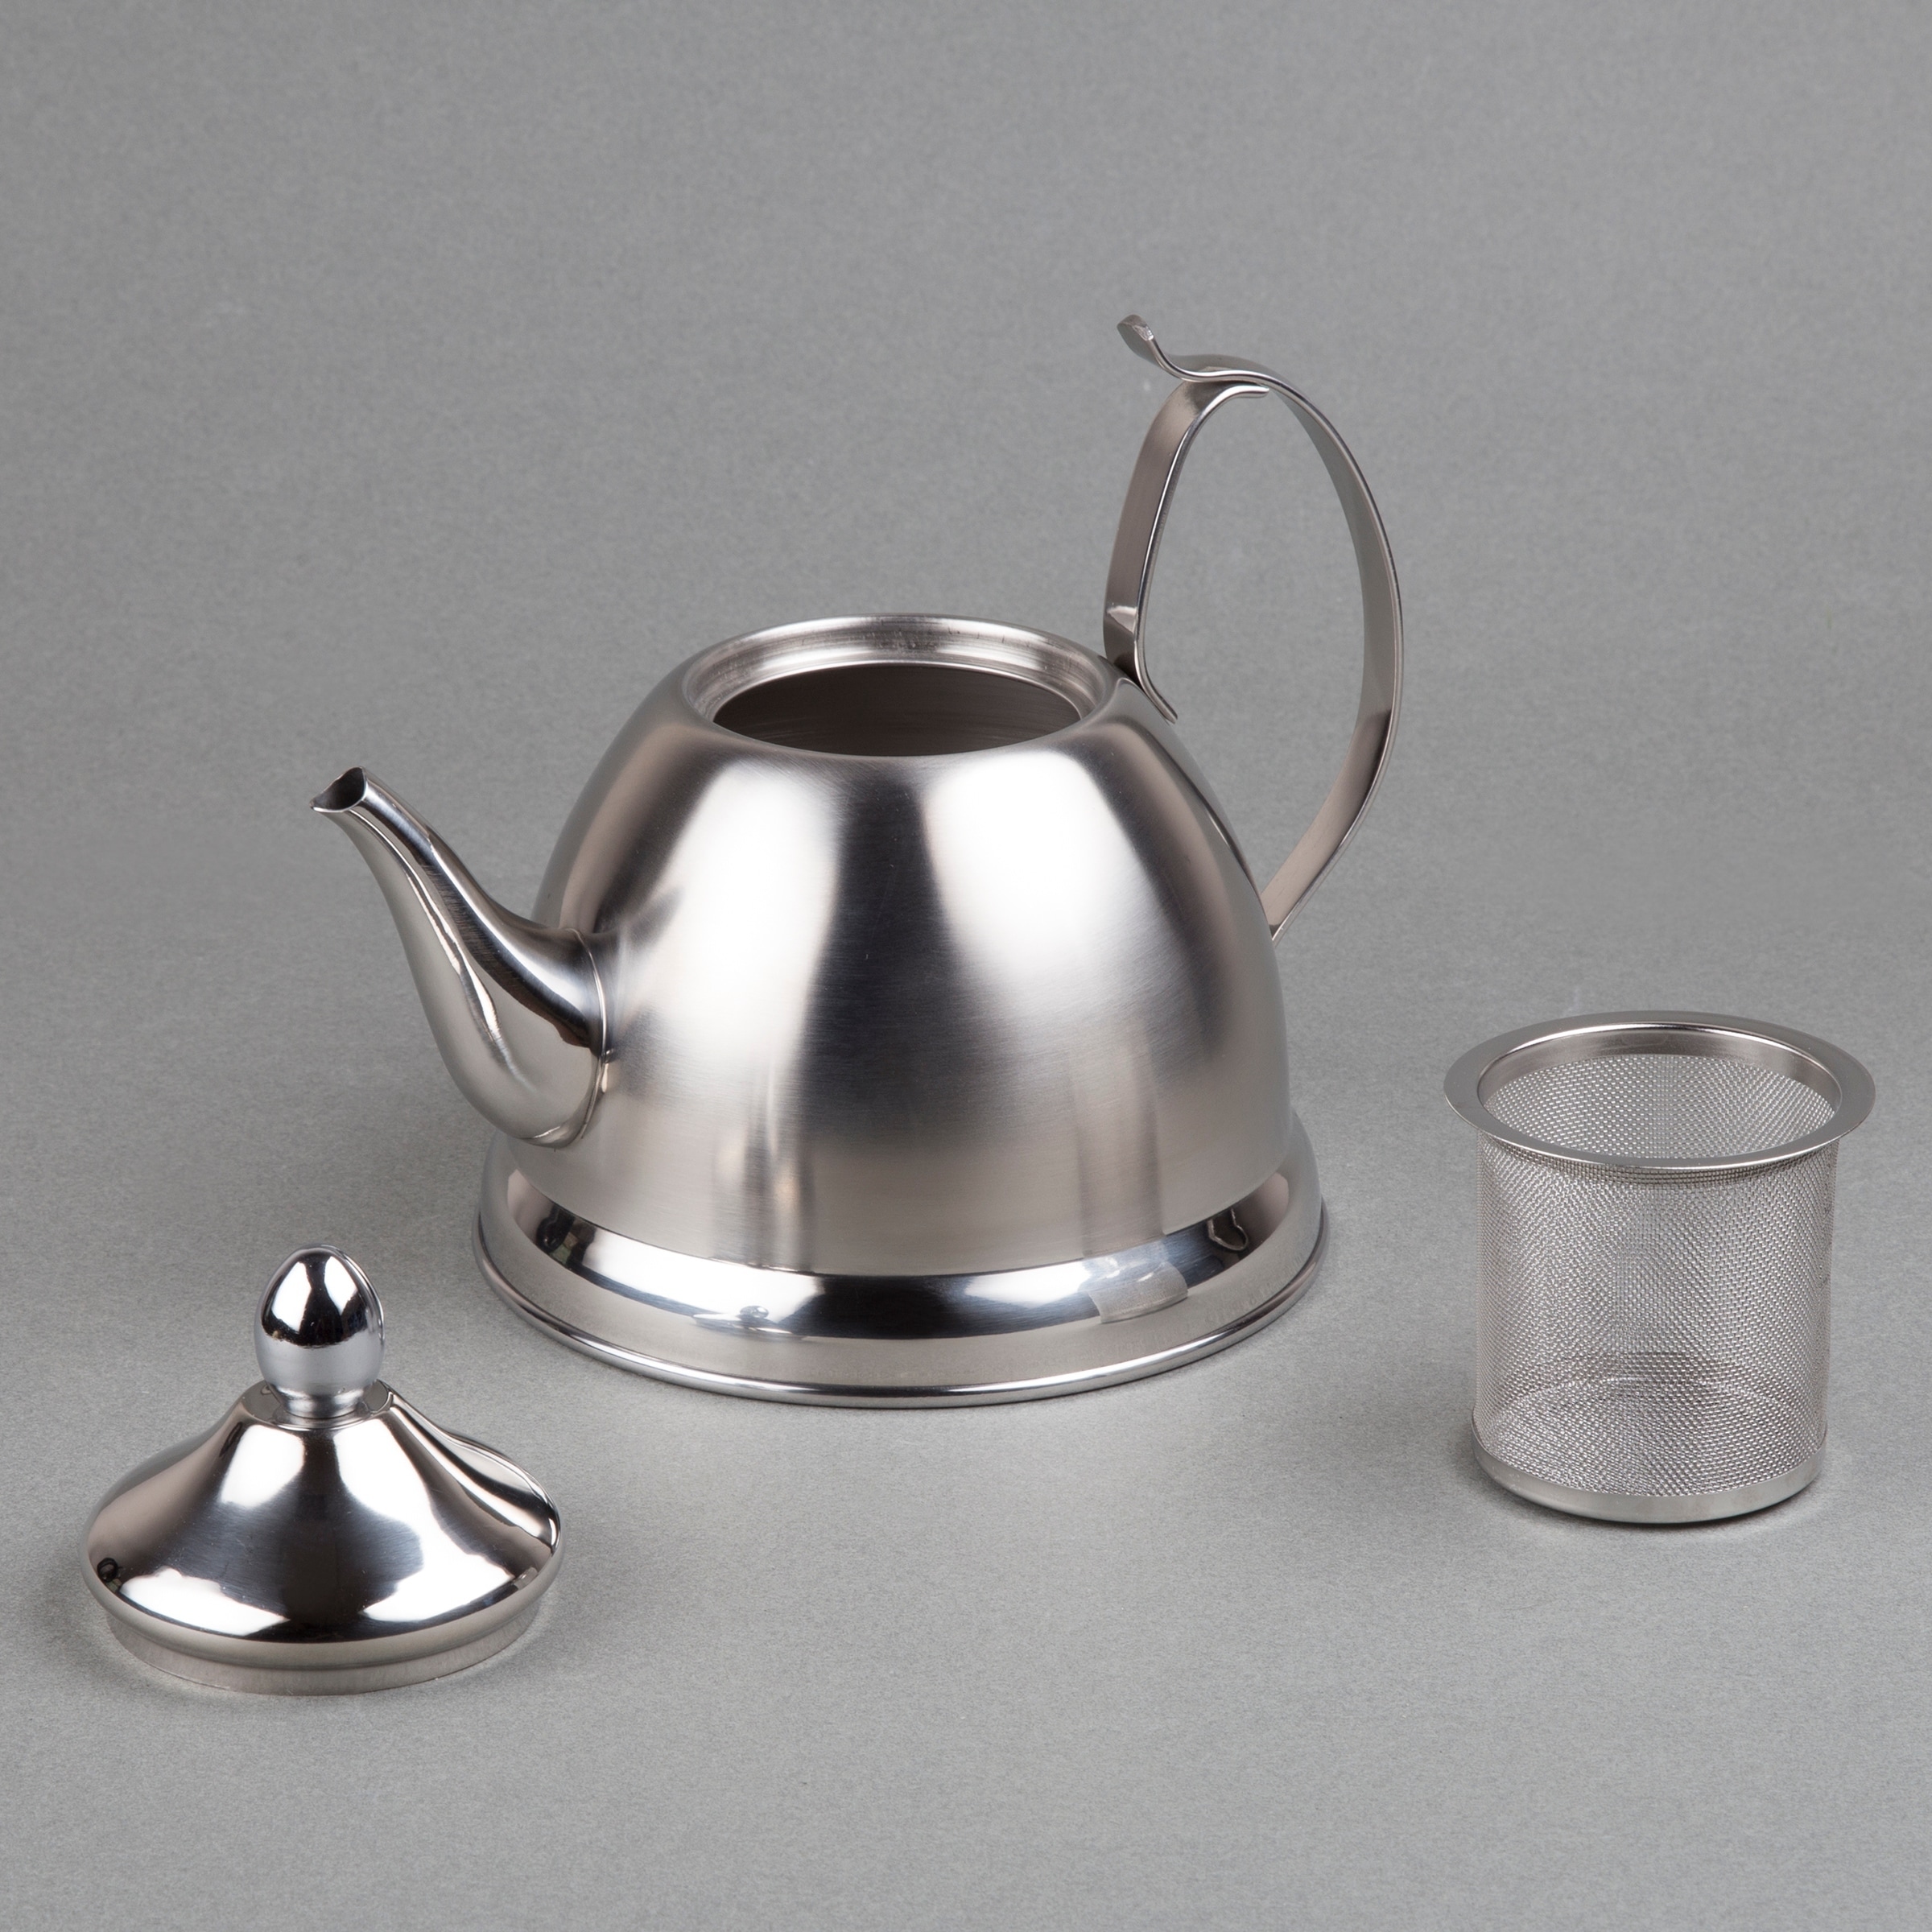 https://ak1.ostkcdn.com/images/products/10669201/Creative-Home-Nobili-Tea-1.0-quart-Tea-Kettle-Tea-Pot-with-Stainless-Steel-Infuser-Basket-15d76fca-5e51-4086-8a98-f2a3932bb073.jpg